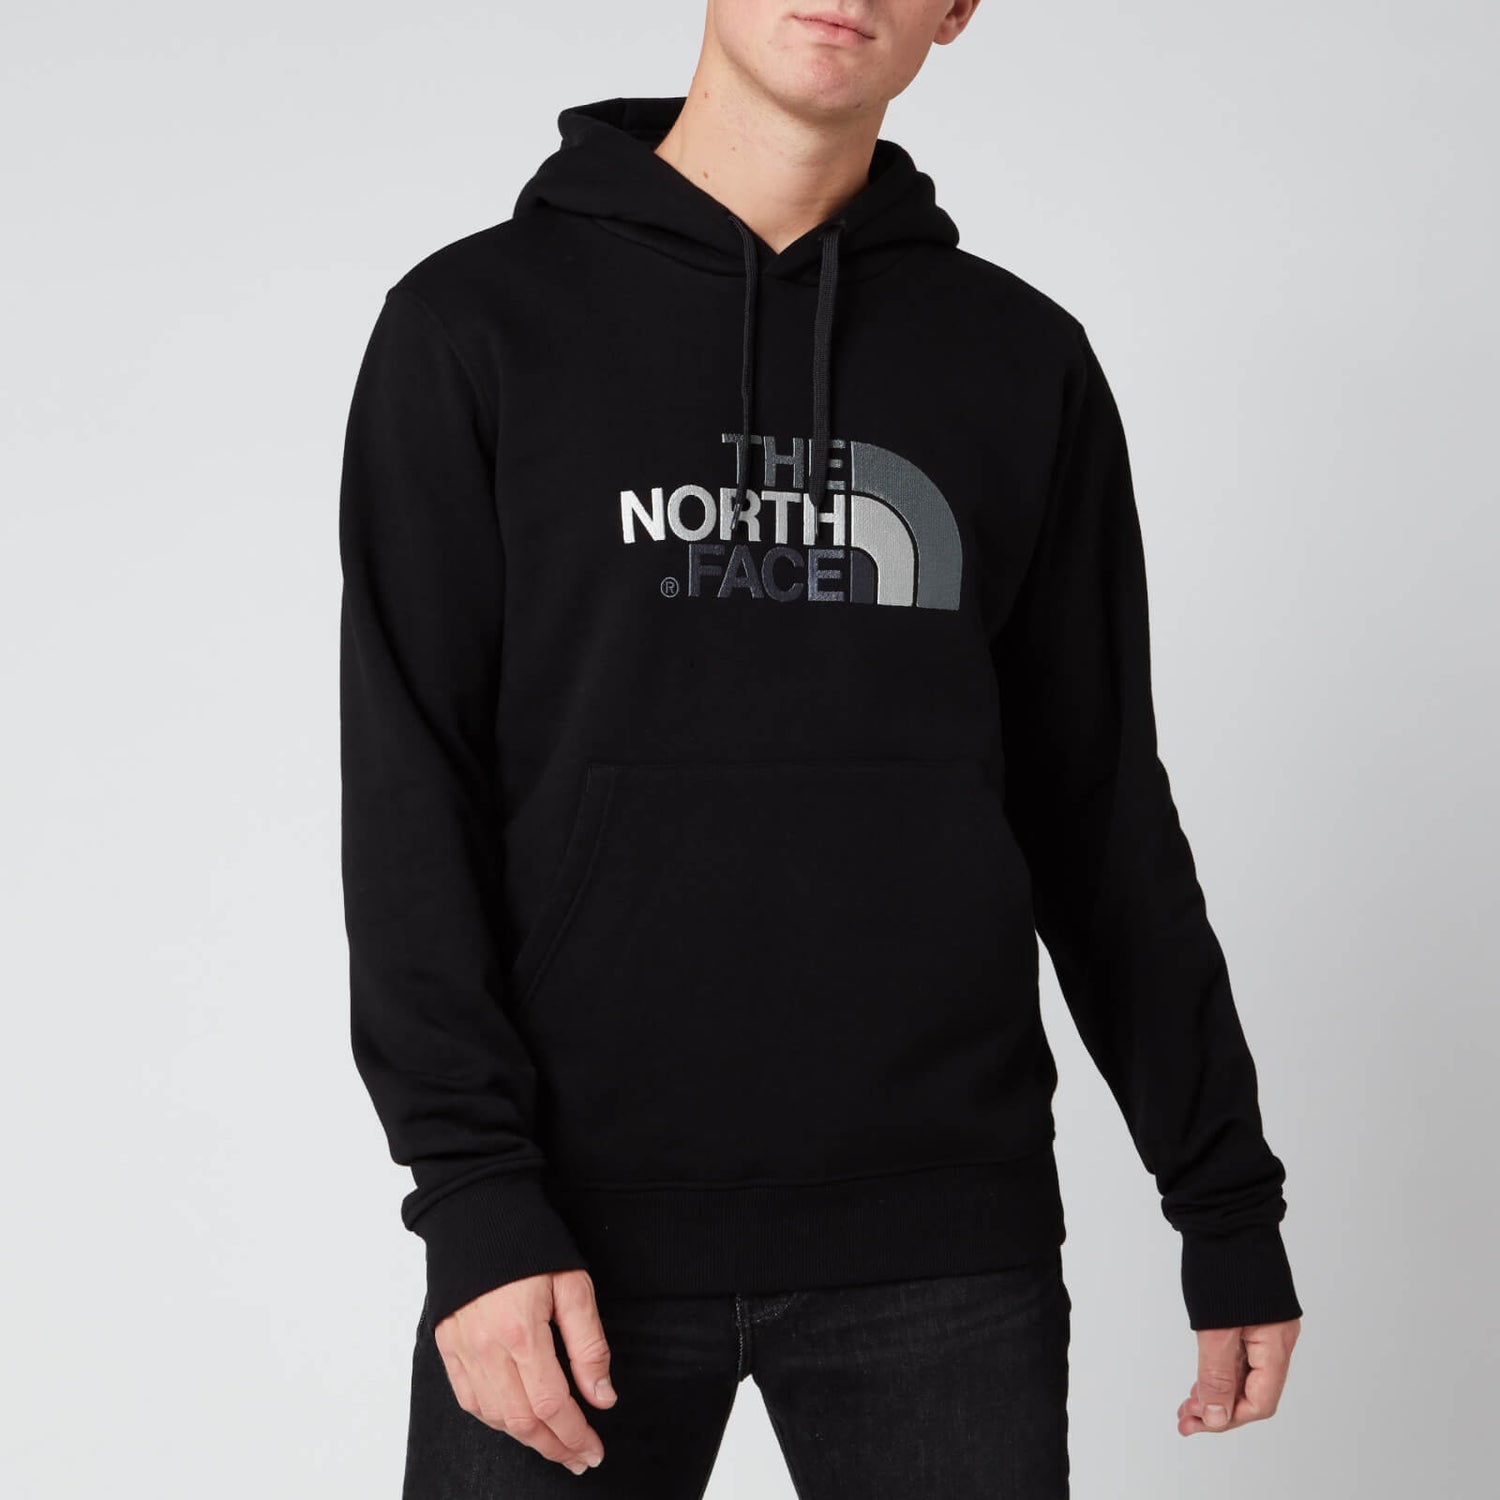 The North Face Men's Drew Peak Pullover Hoody - TNF Black - S